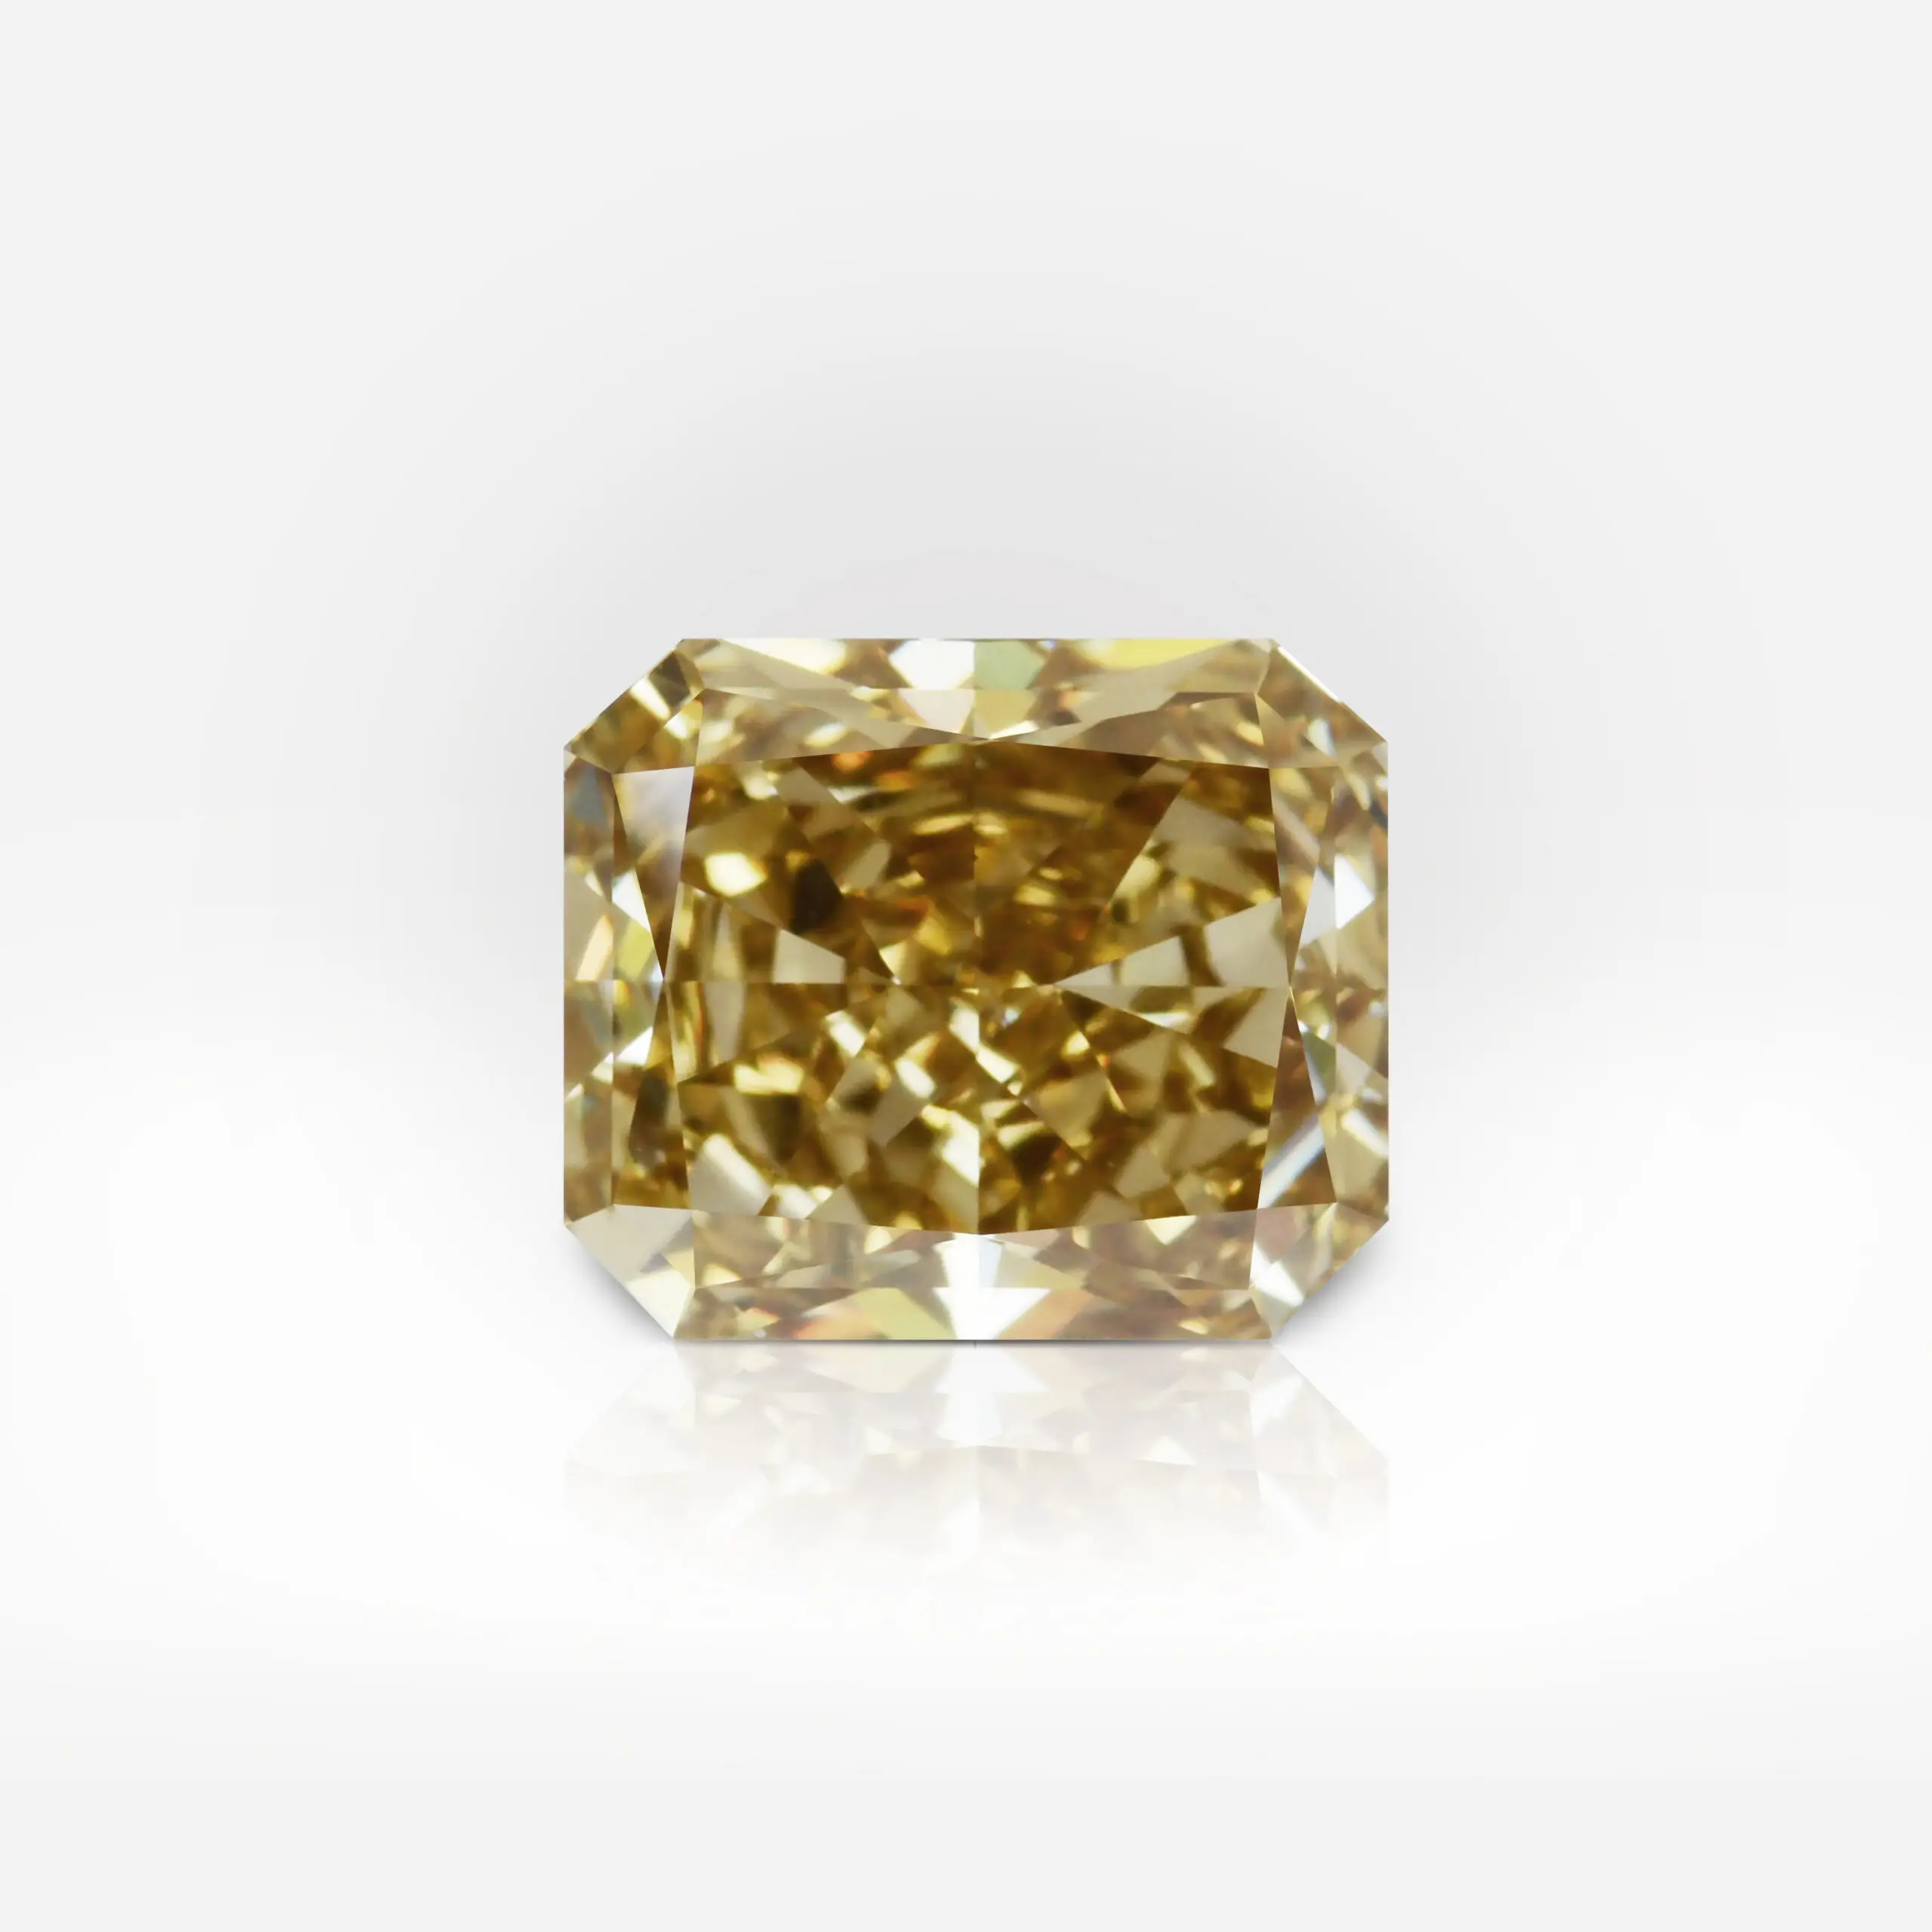 1.57 carat Fancy Deep Brownish Yellow VVS1 Radiant Shape Diamond GIA - picture 1